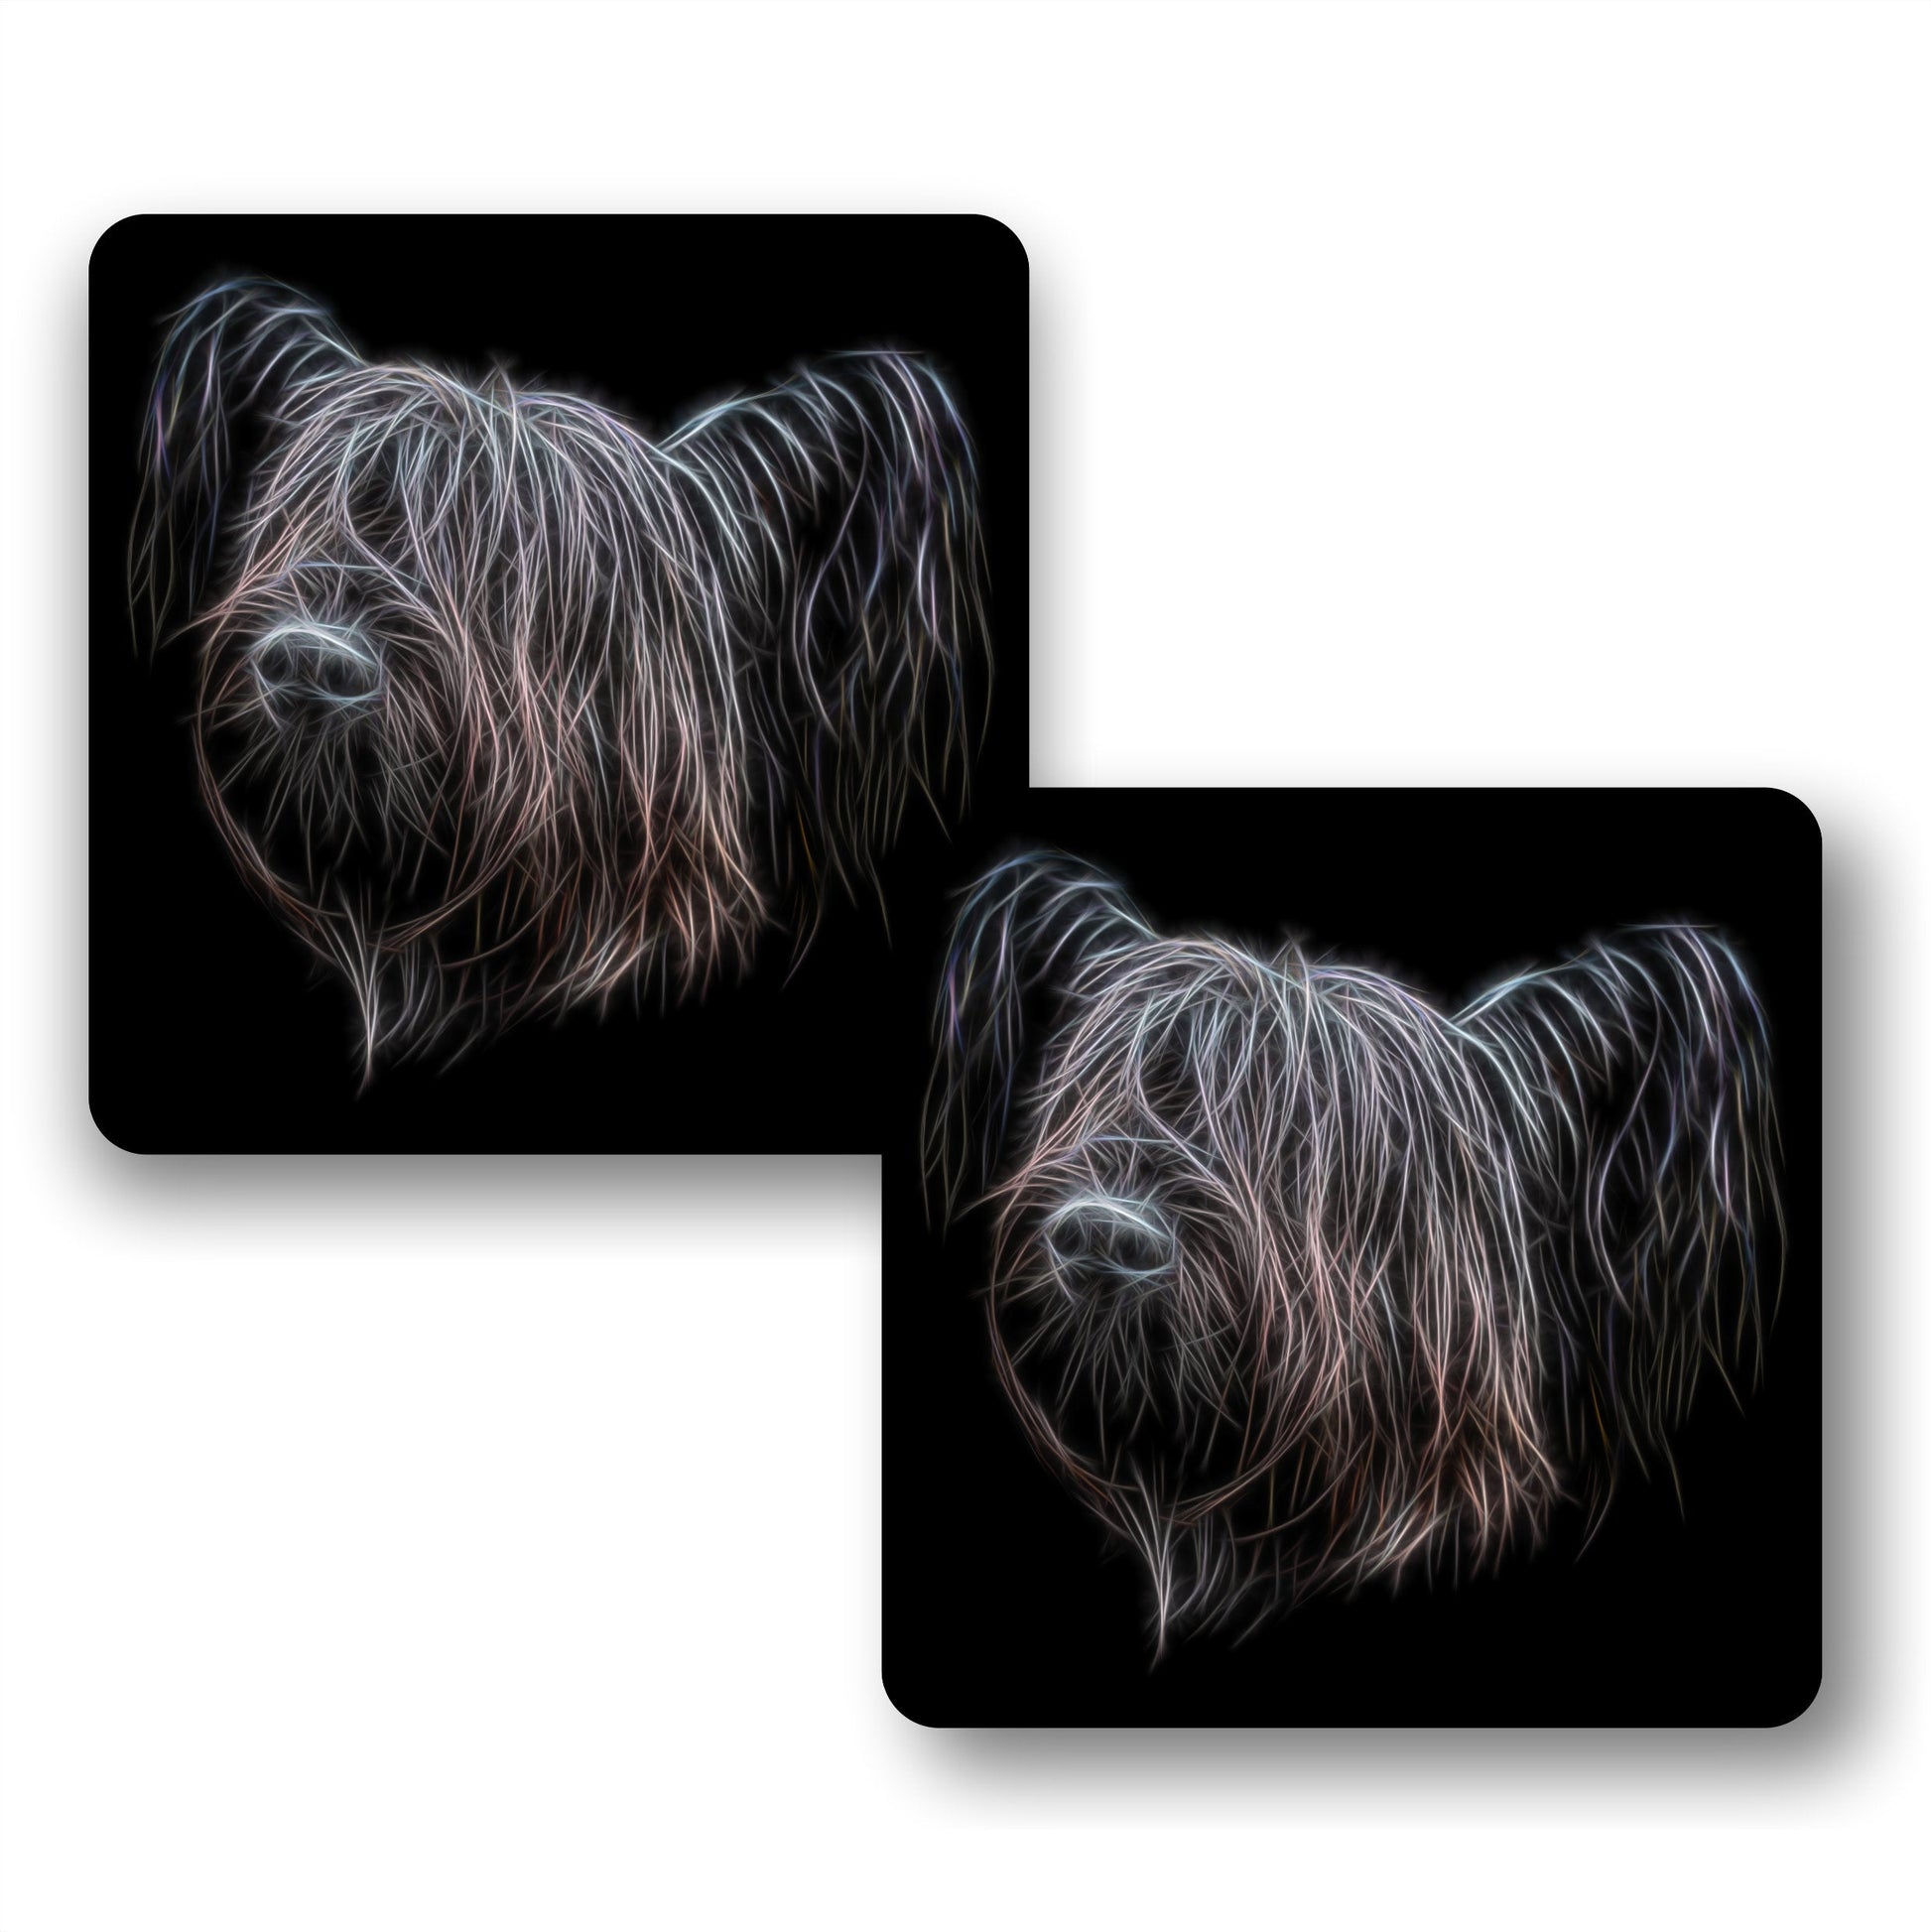 Skye Terrier Coasters, Set of 2, with Stunning Fractal Art Design.